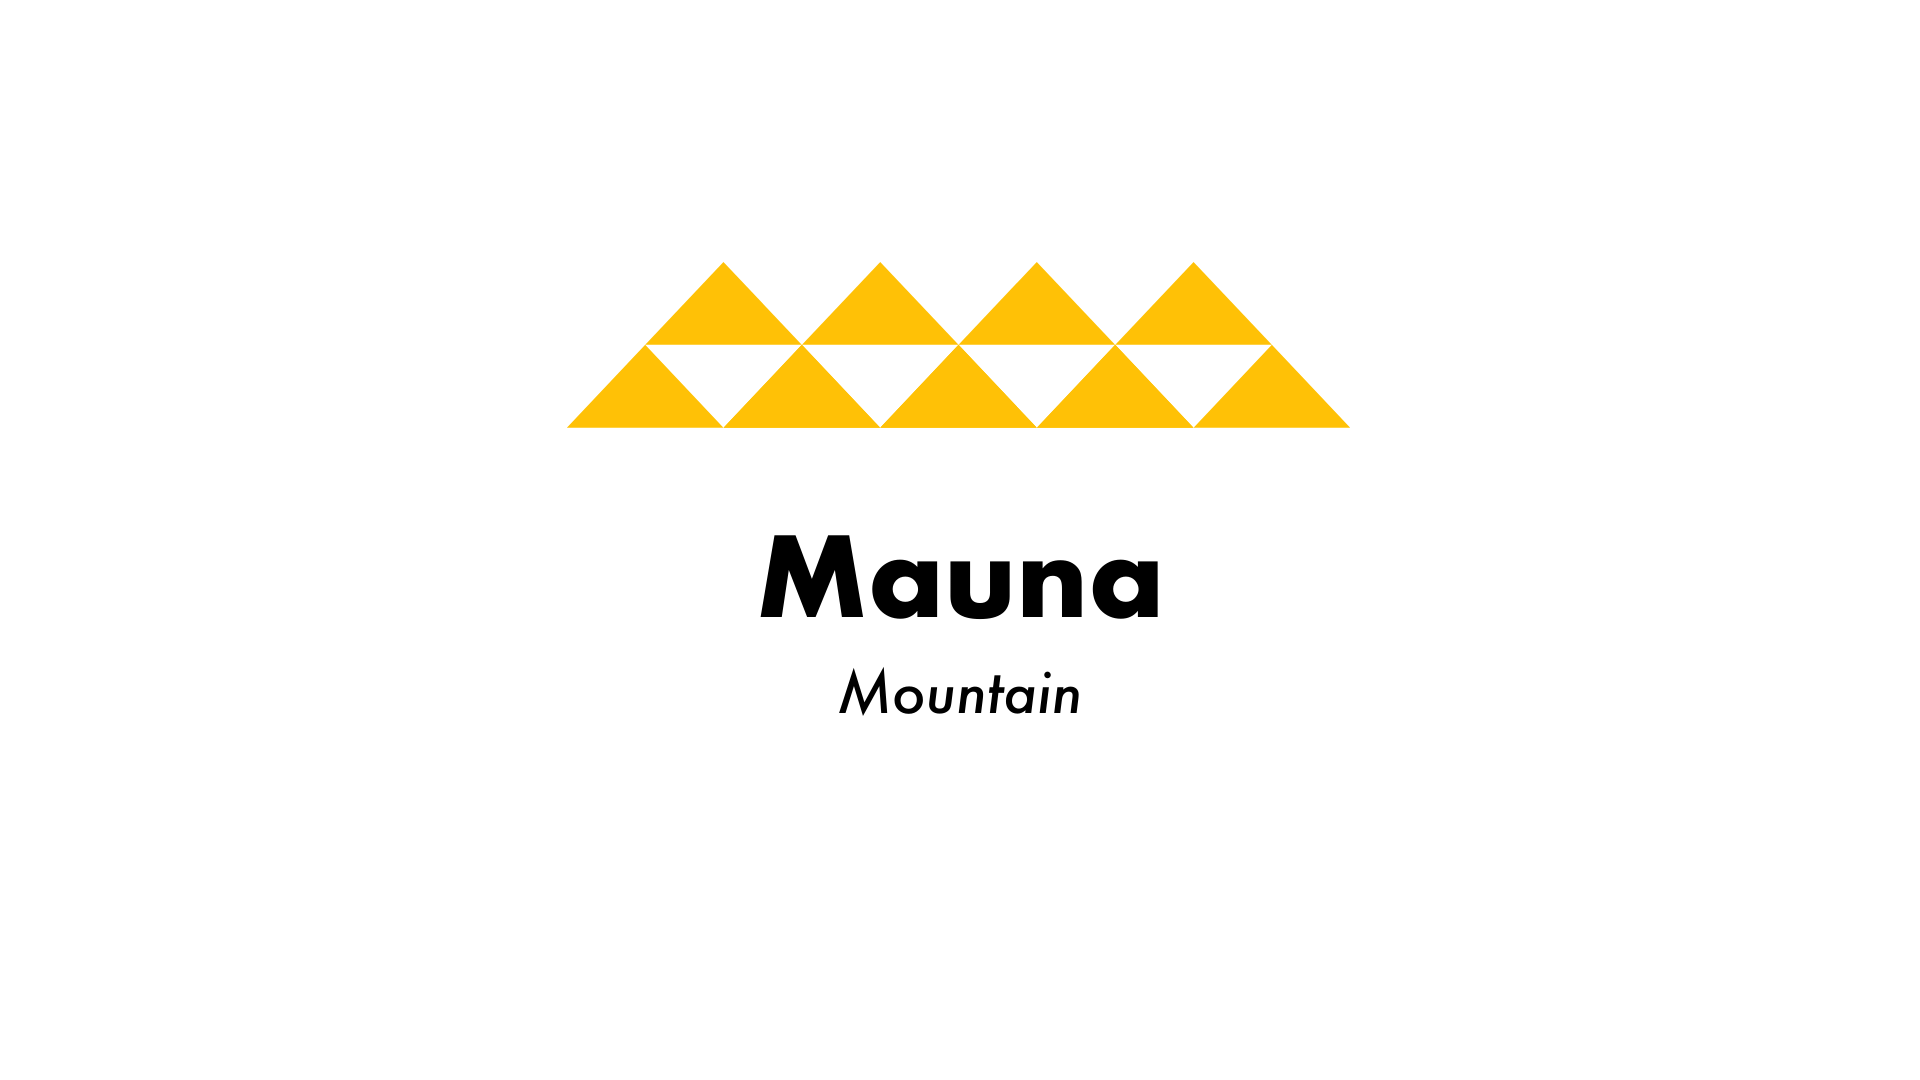 Mauna or mountain Hawaiian design